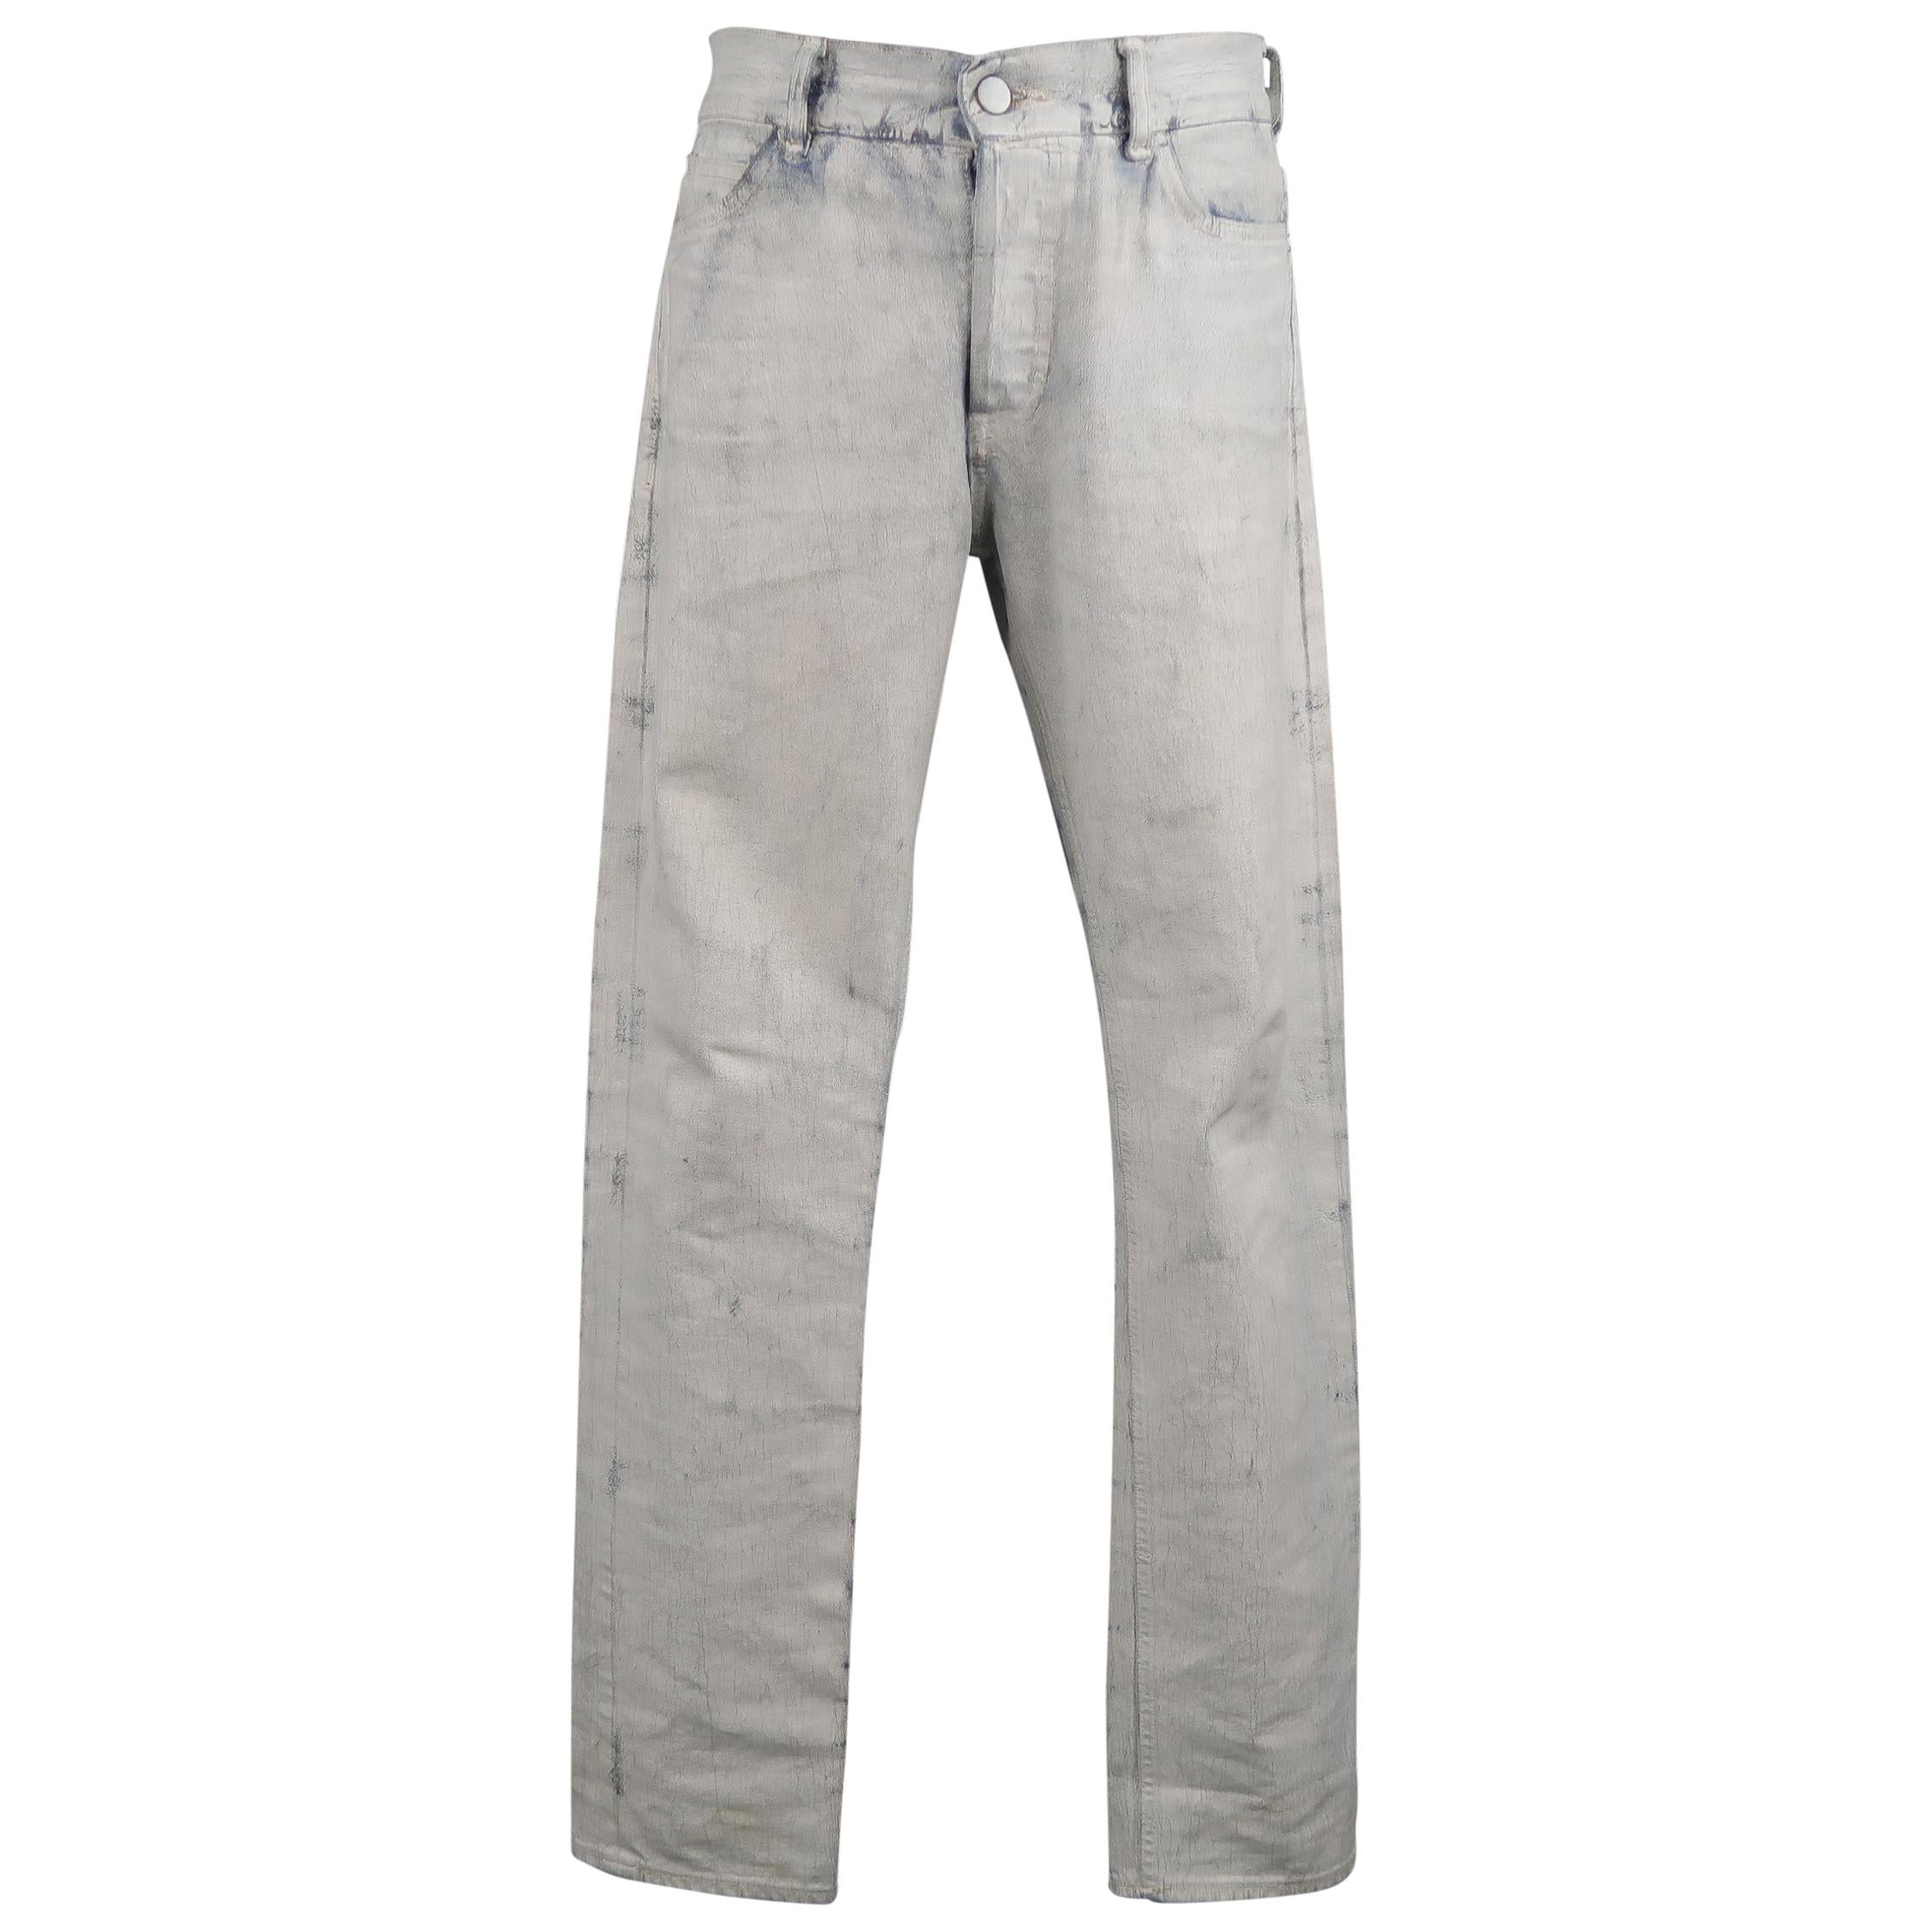 Maison Martin Margiela White Painted Denim Jeans